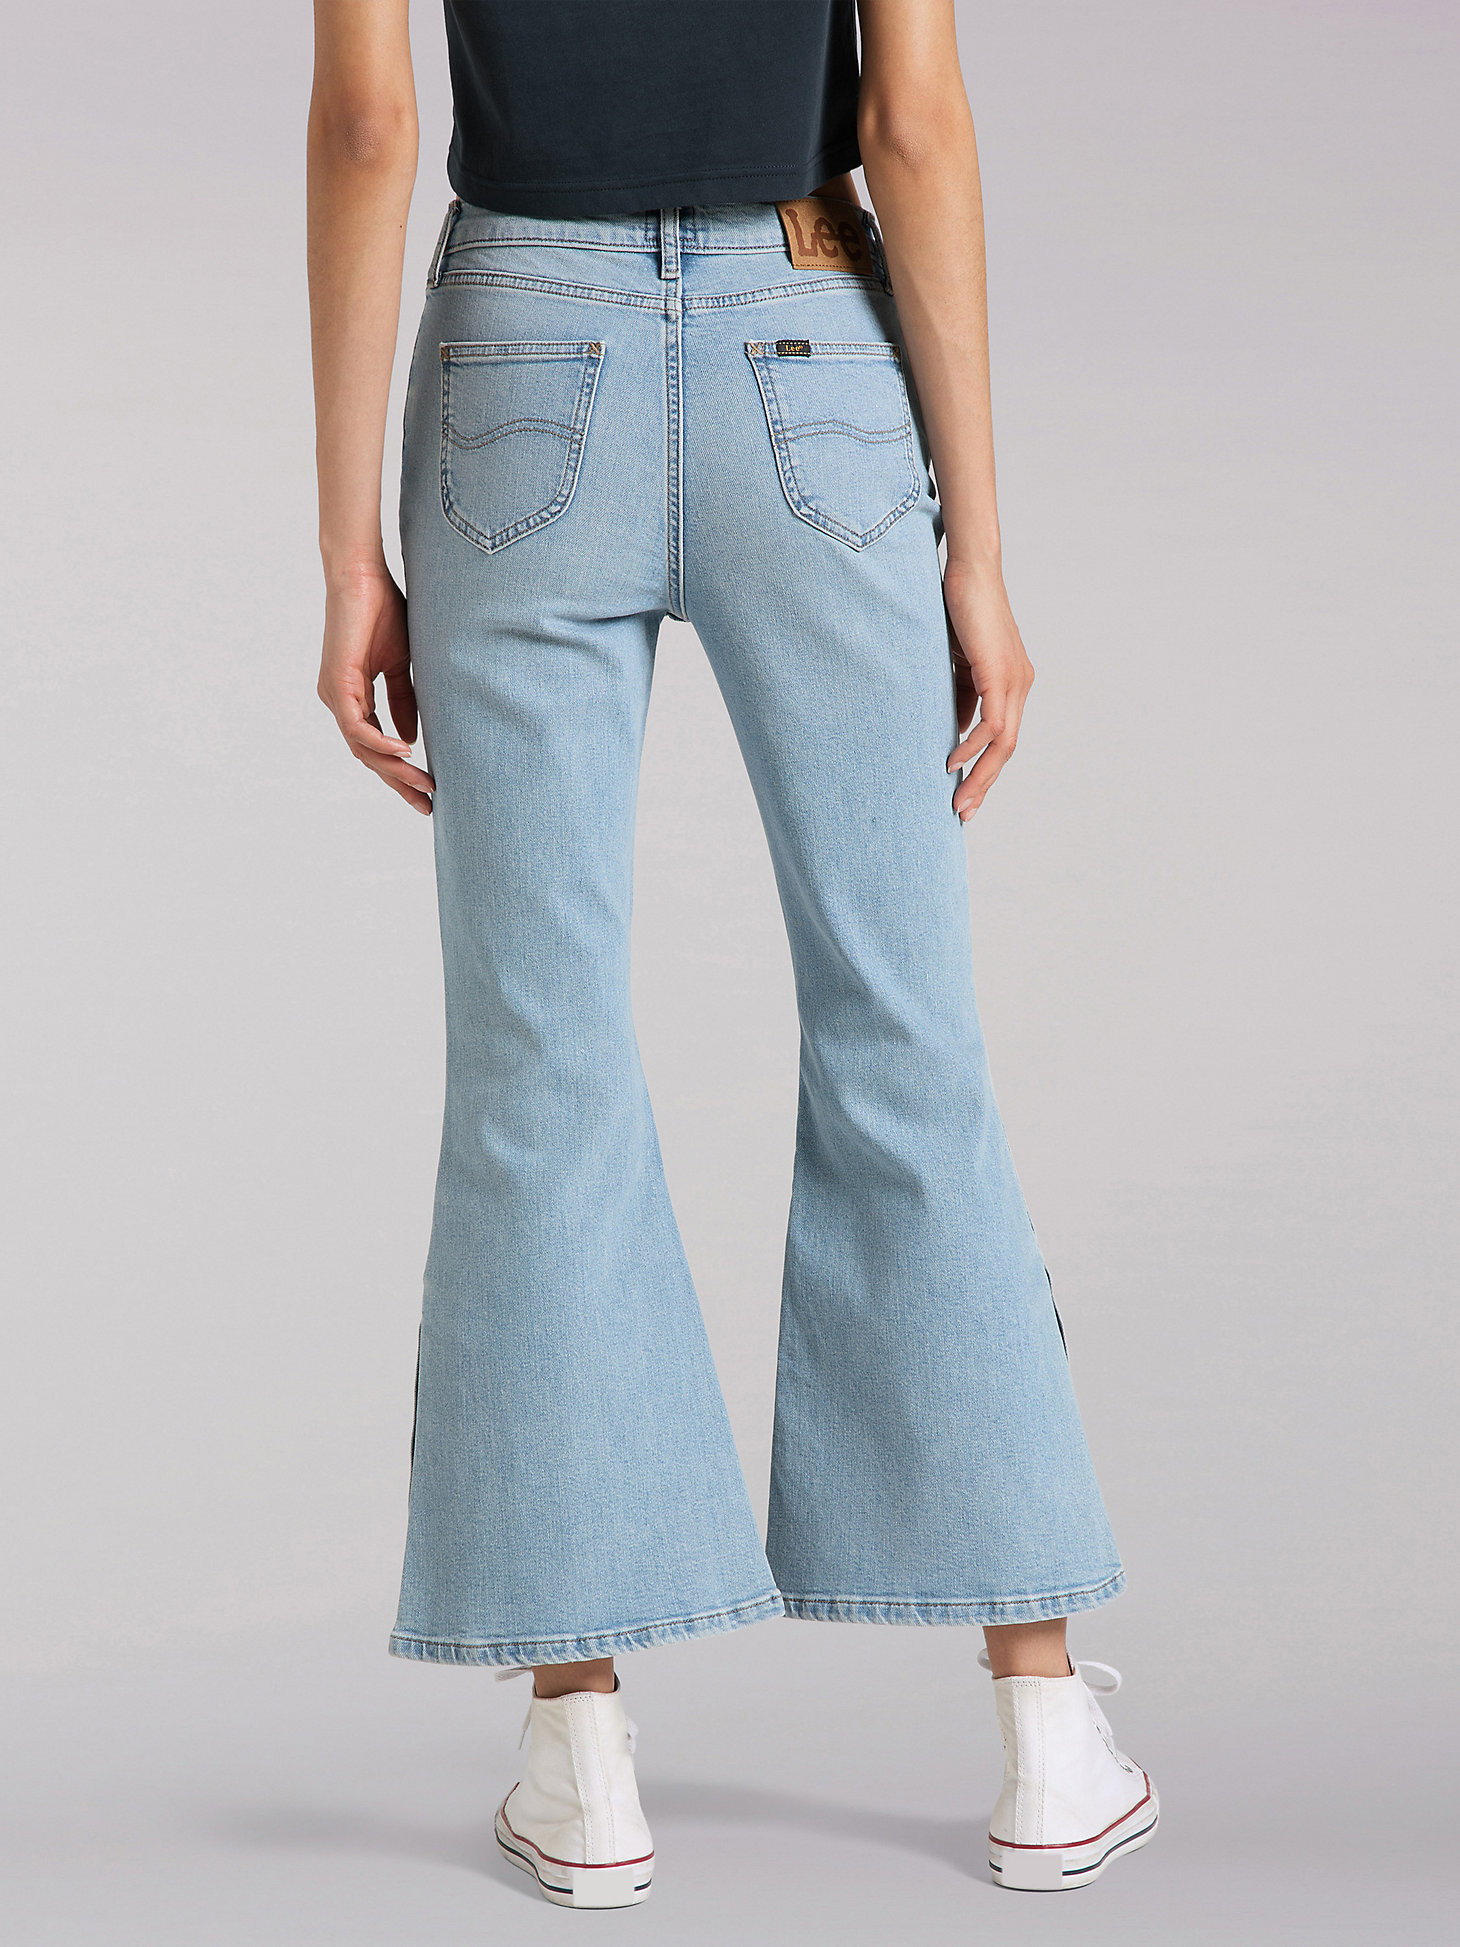 Women's Lee European Collection High Rise Split Flare Jean in Sunbleach alternative view 1